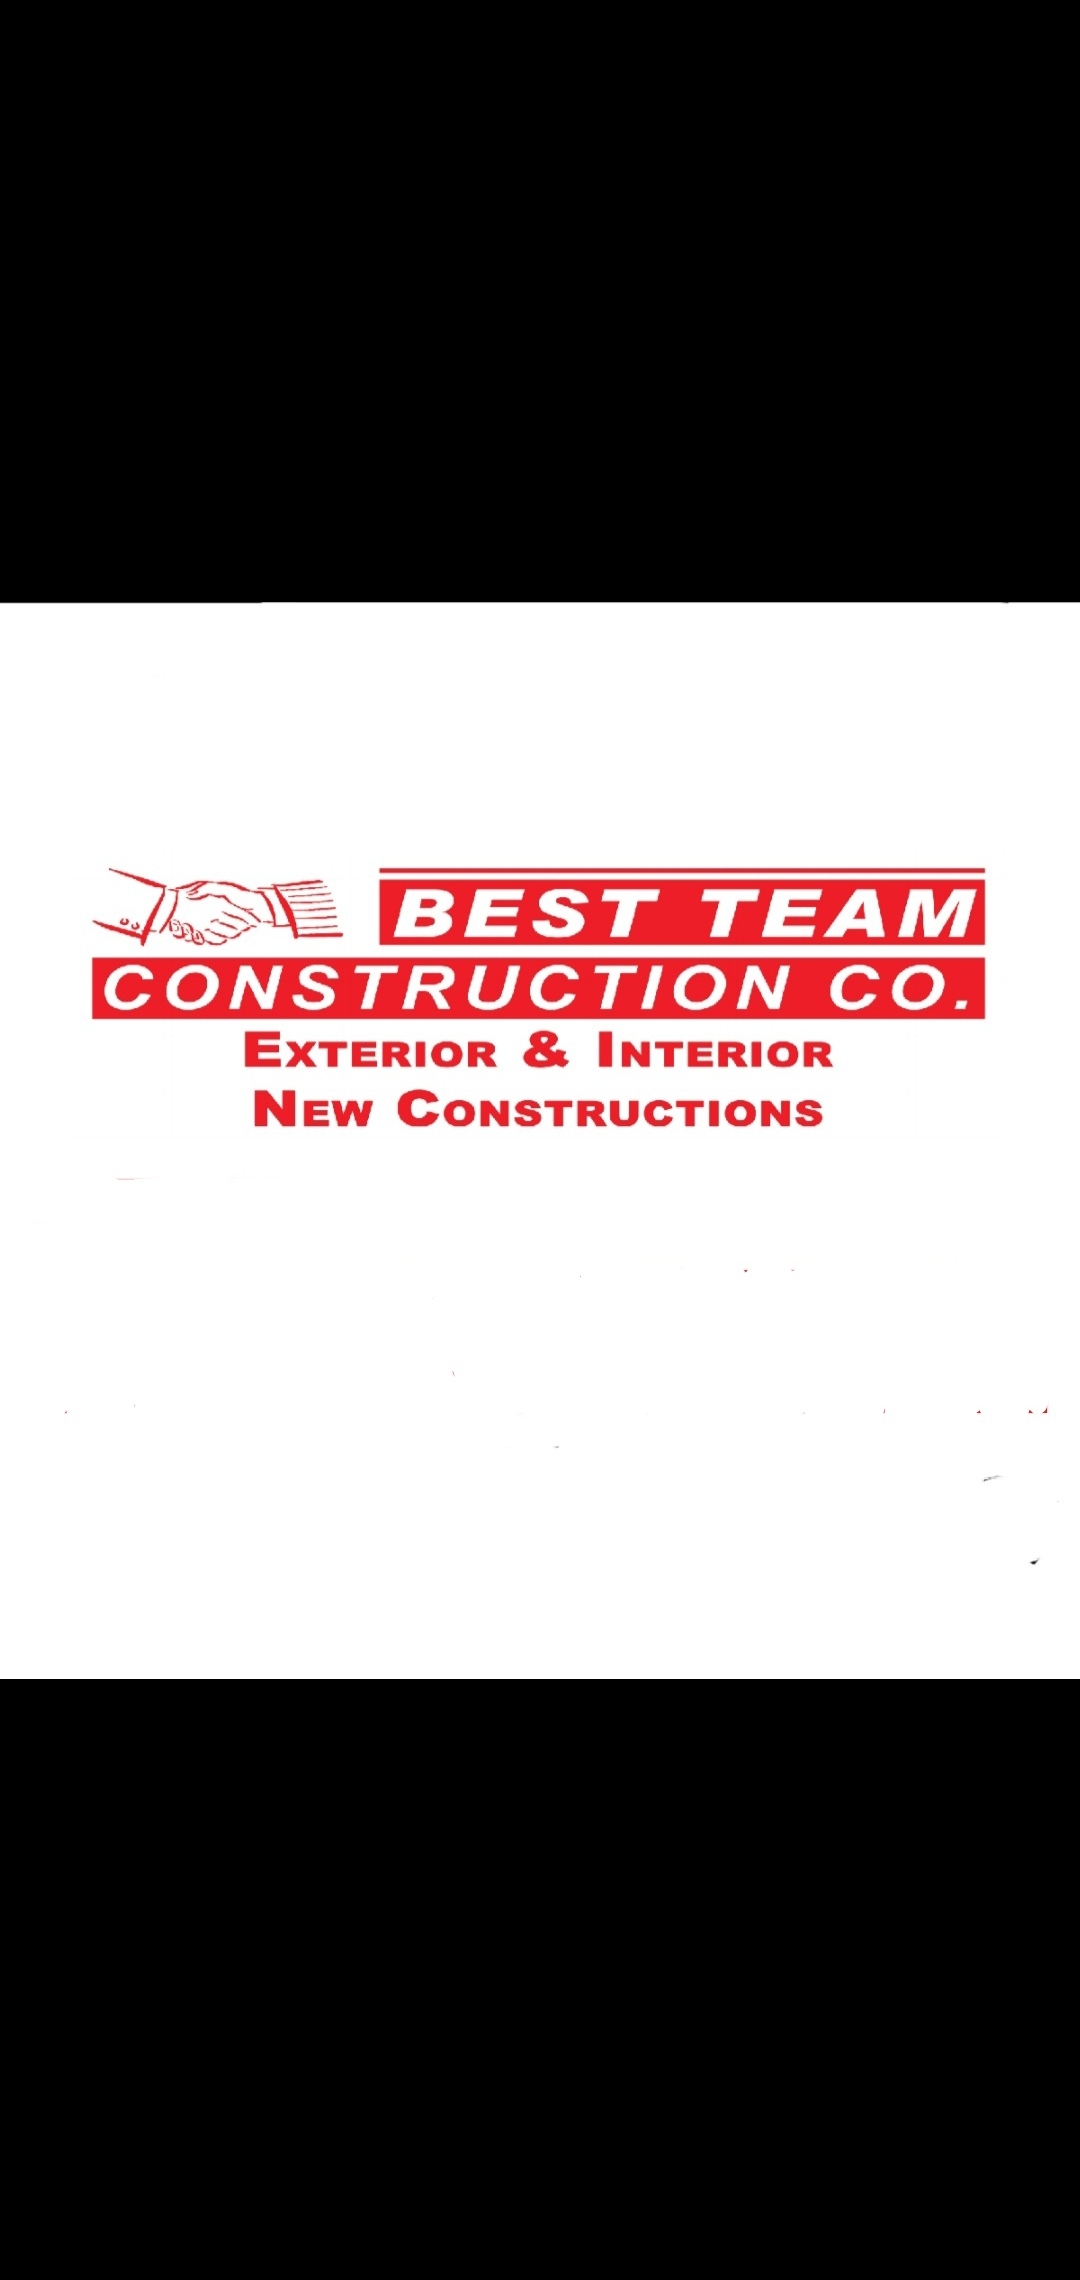 Best Team Construction Company Logo